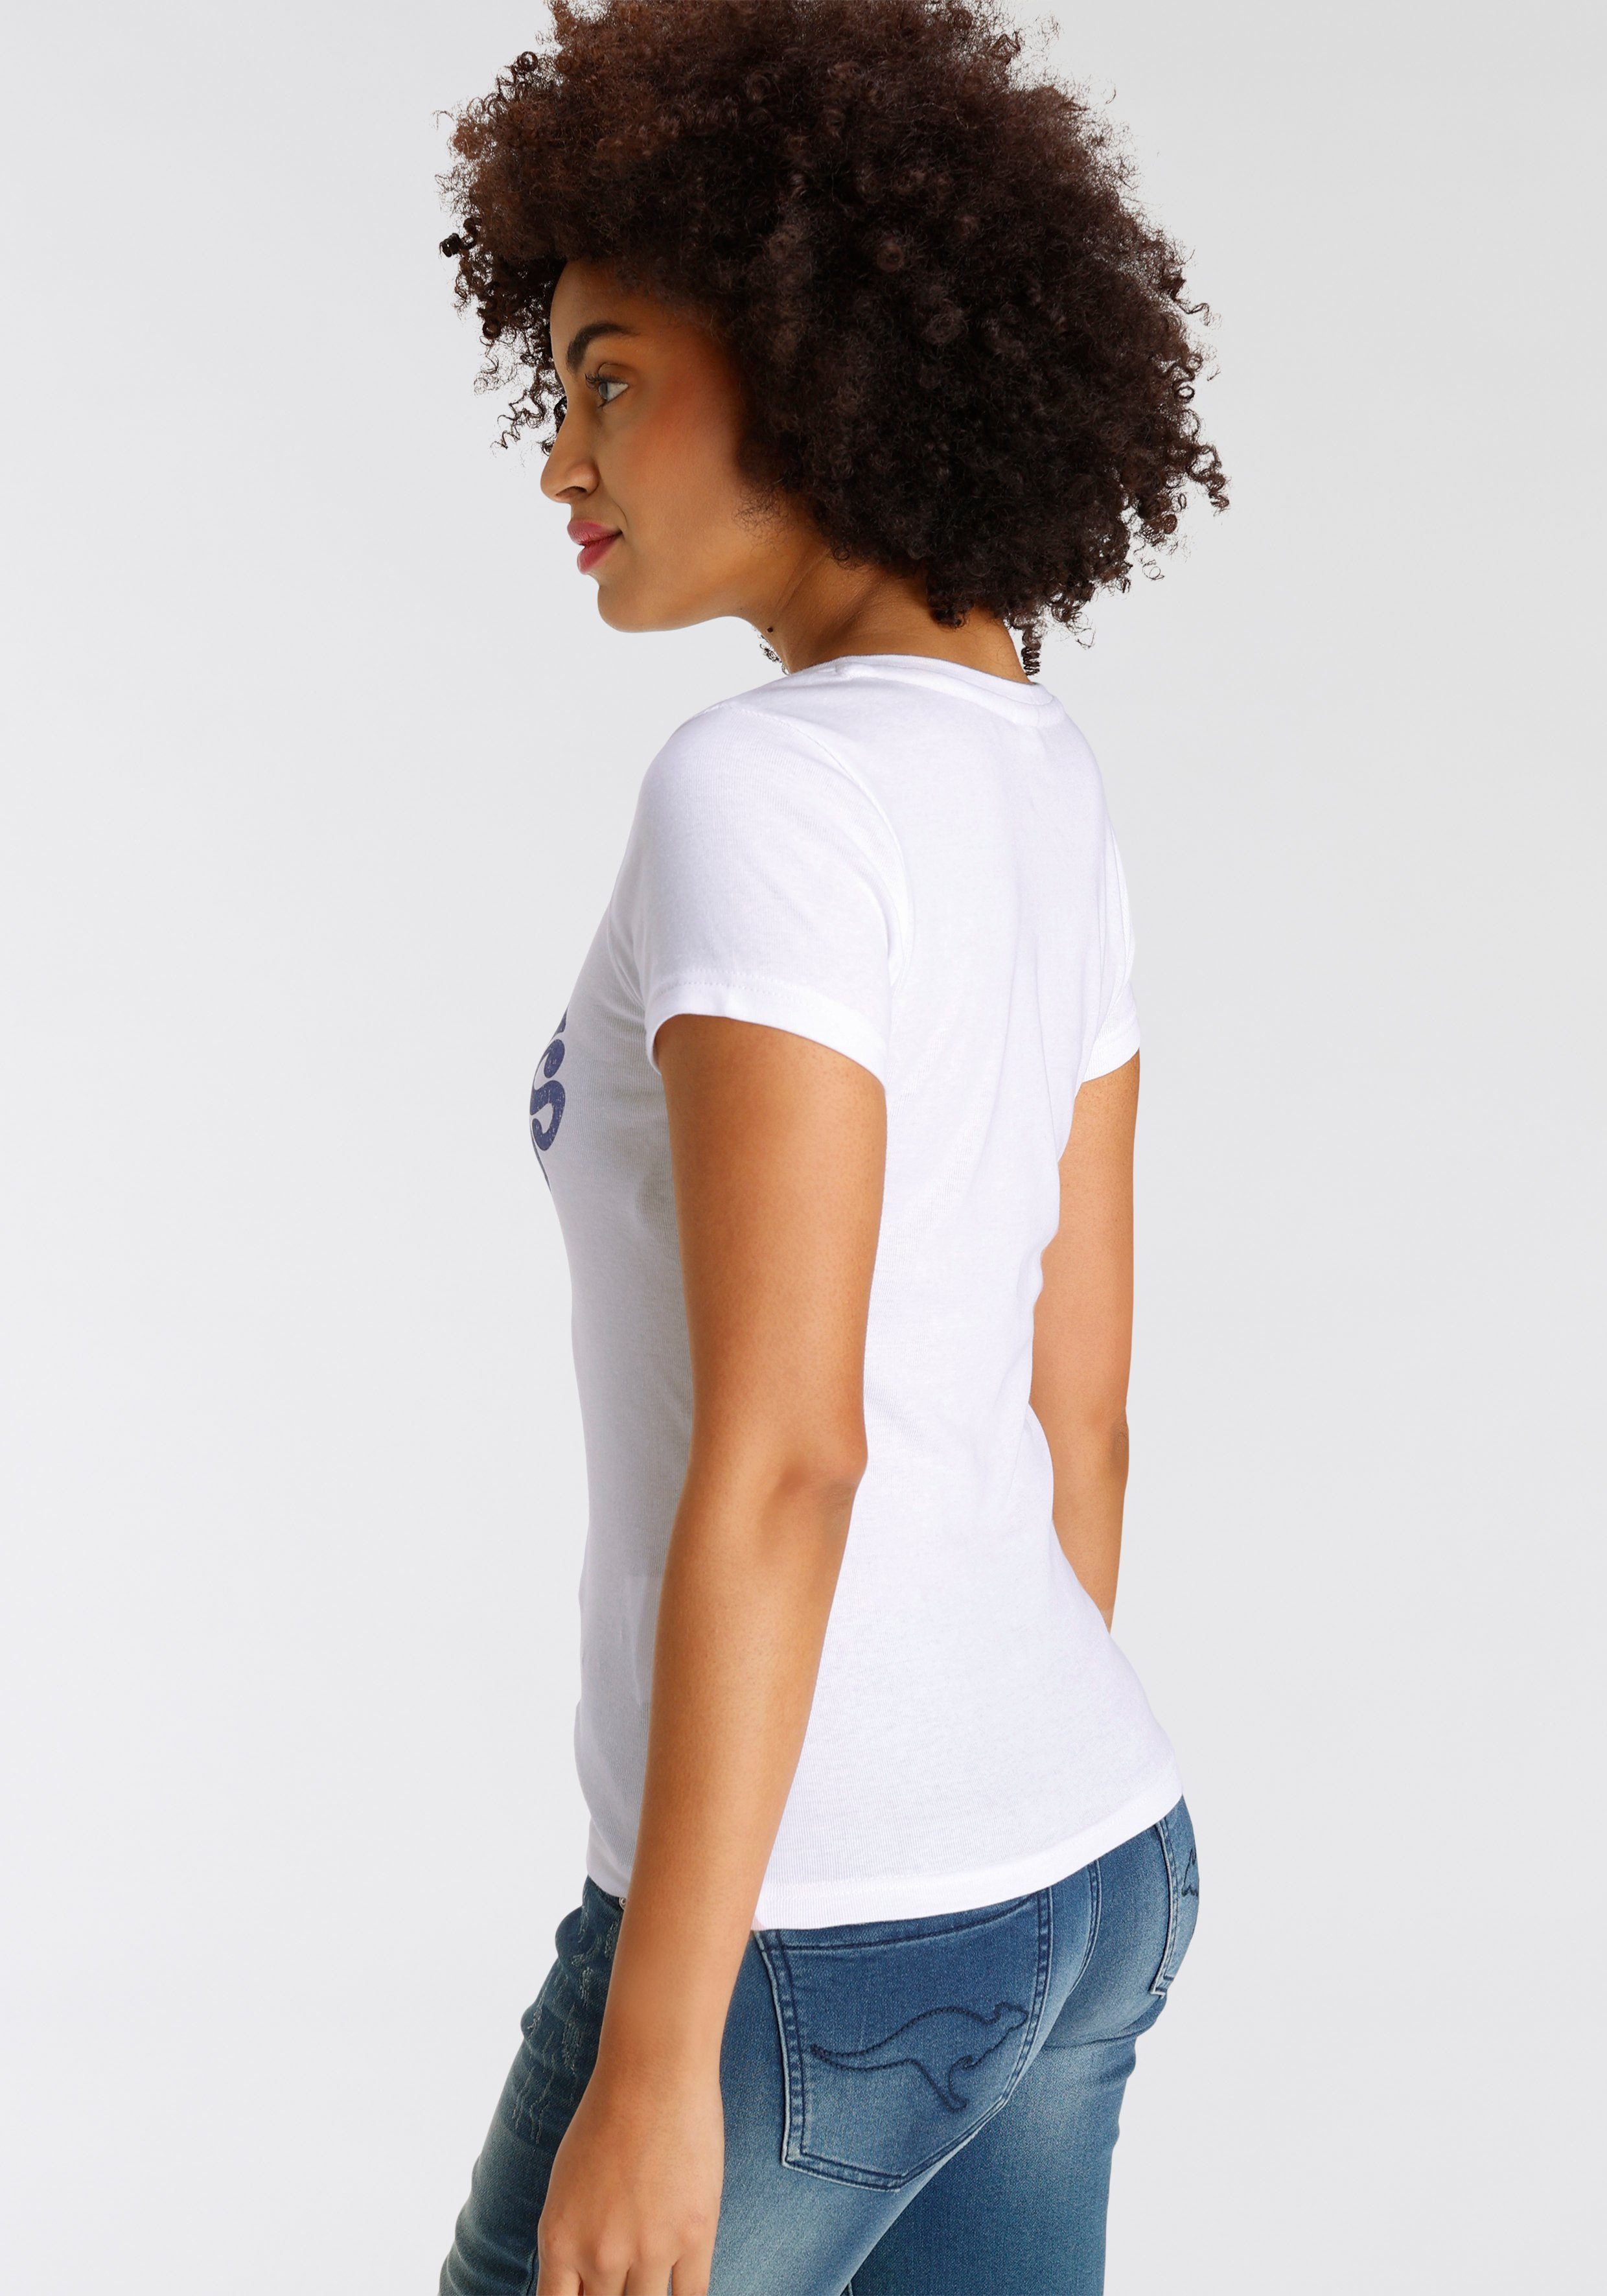 KangaROOS Print-Shirt mit herzlichem NEUE weiß-blau - KOLLEKTION Retro-Logoprint